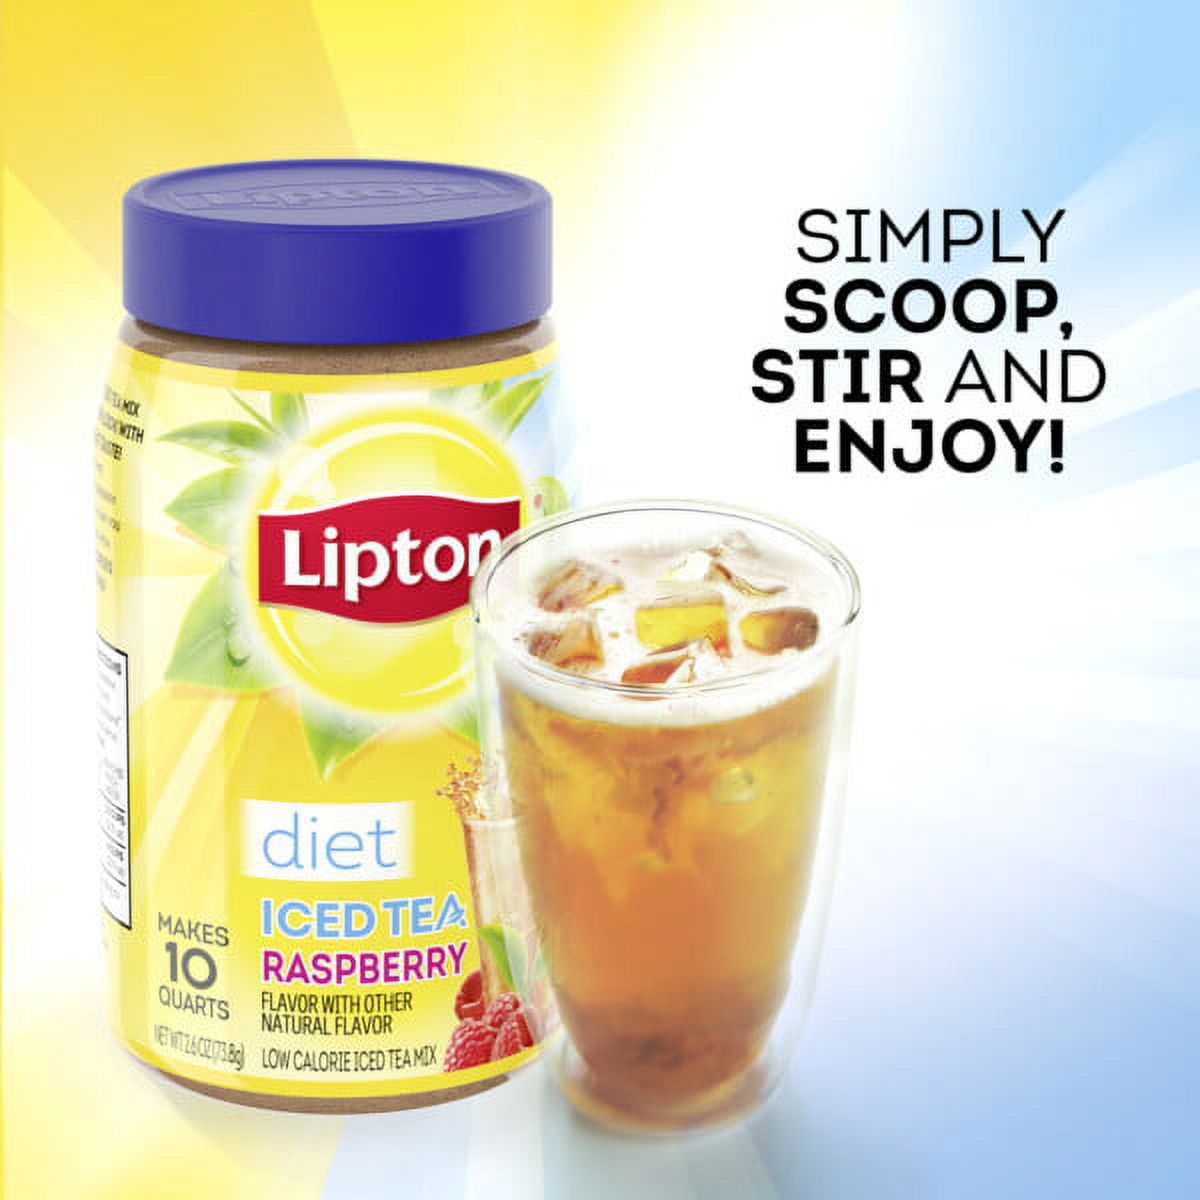 Lipton Iced Tea Mix, Black Tea, Raspberry, Caffeinated, Sugar-Free, Makes 10 Quarts - image 7 of 10